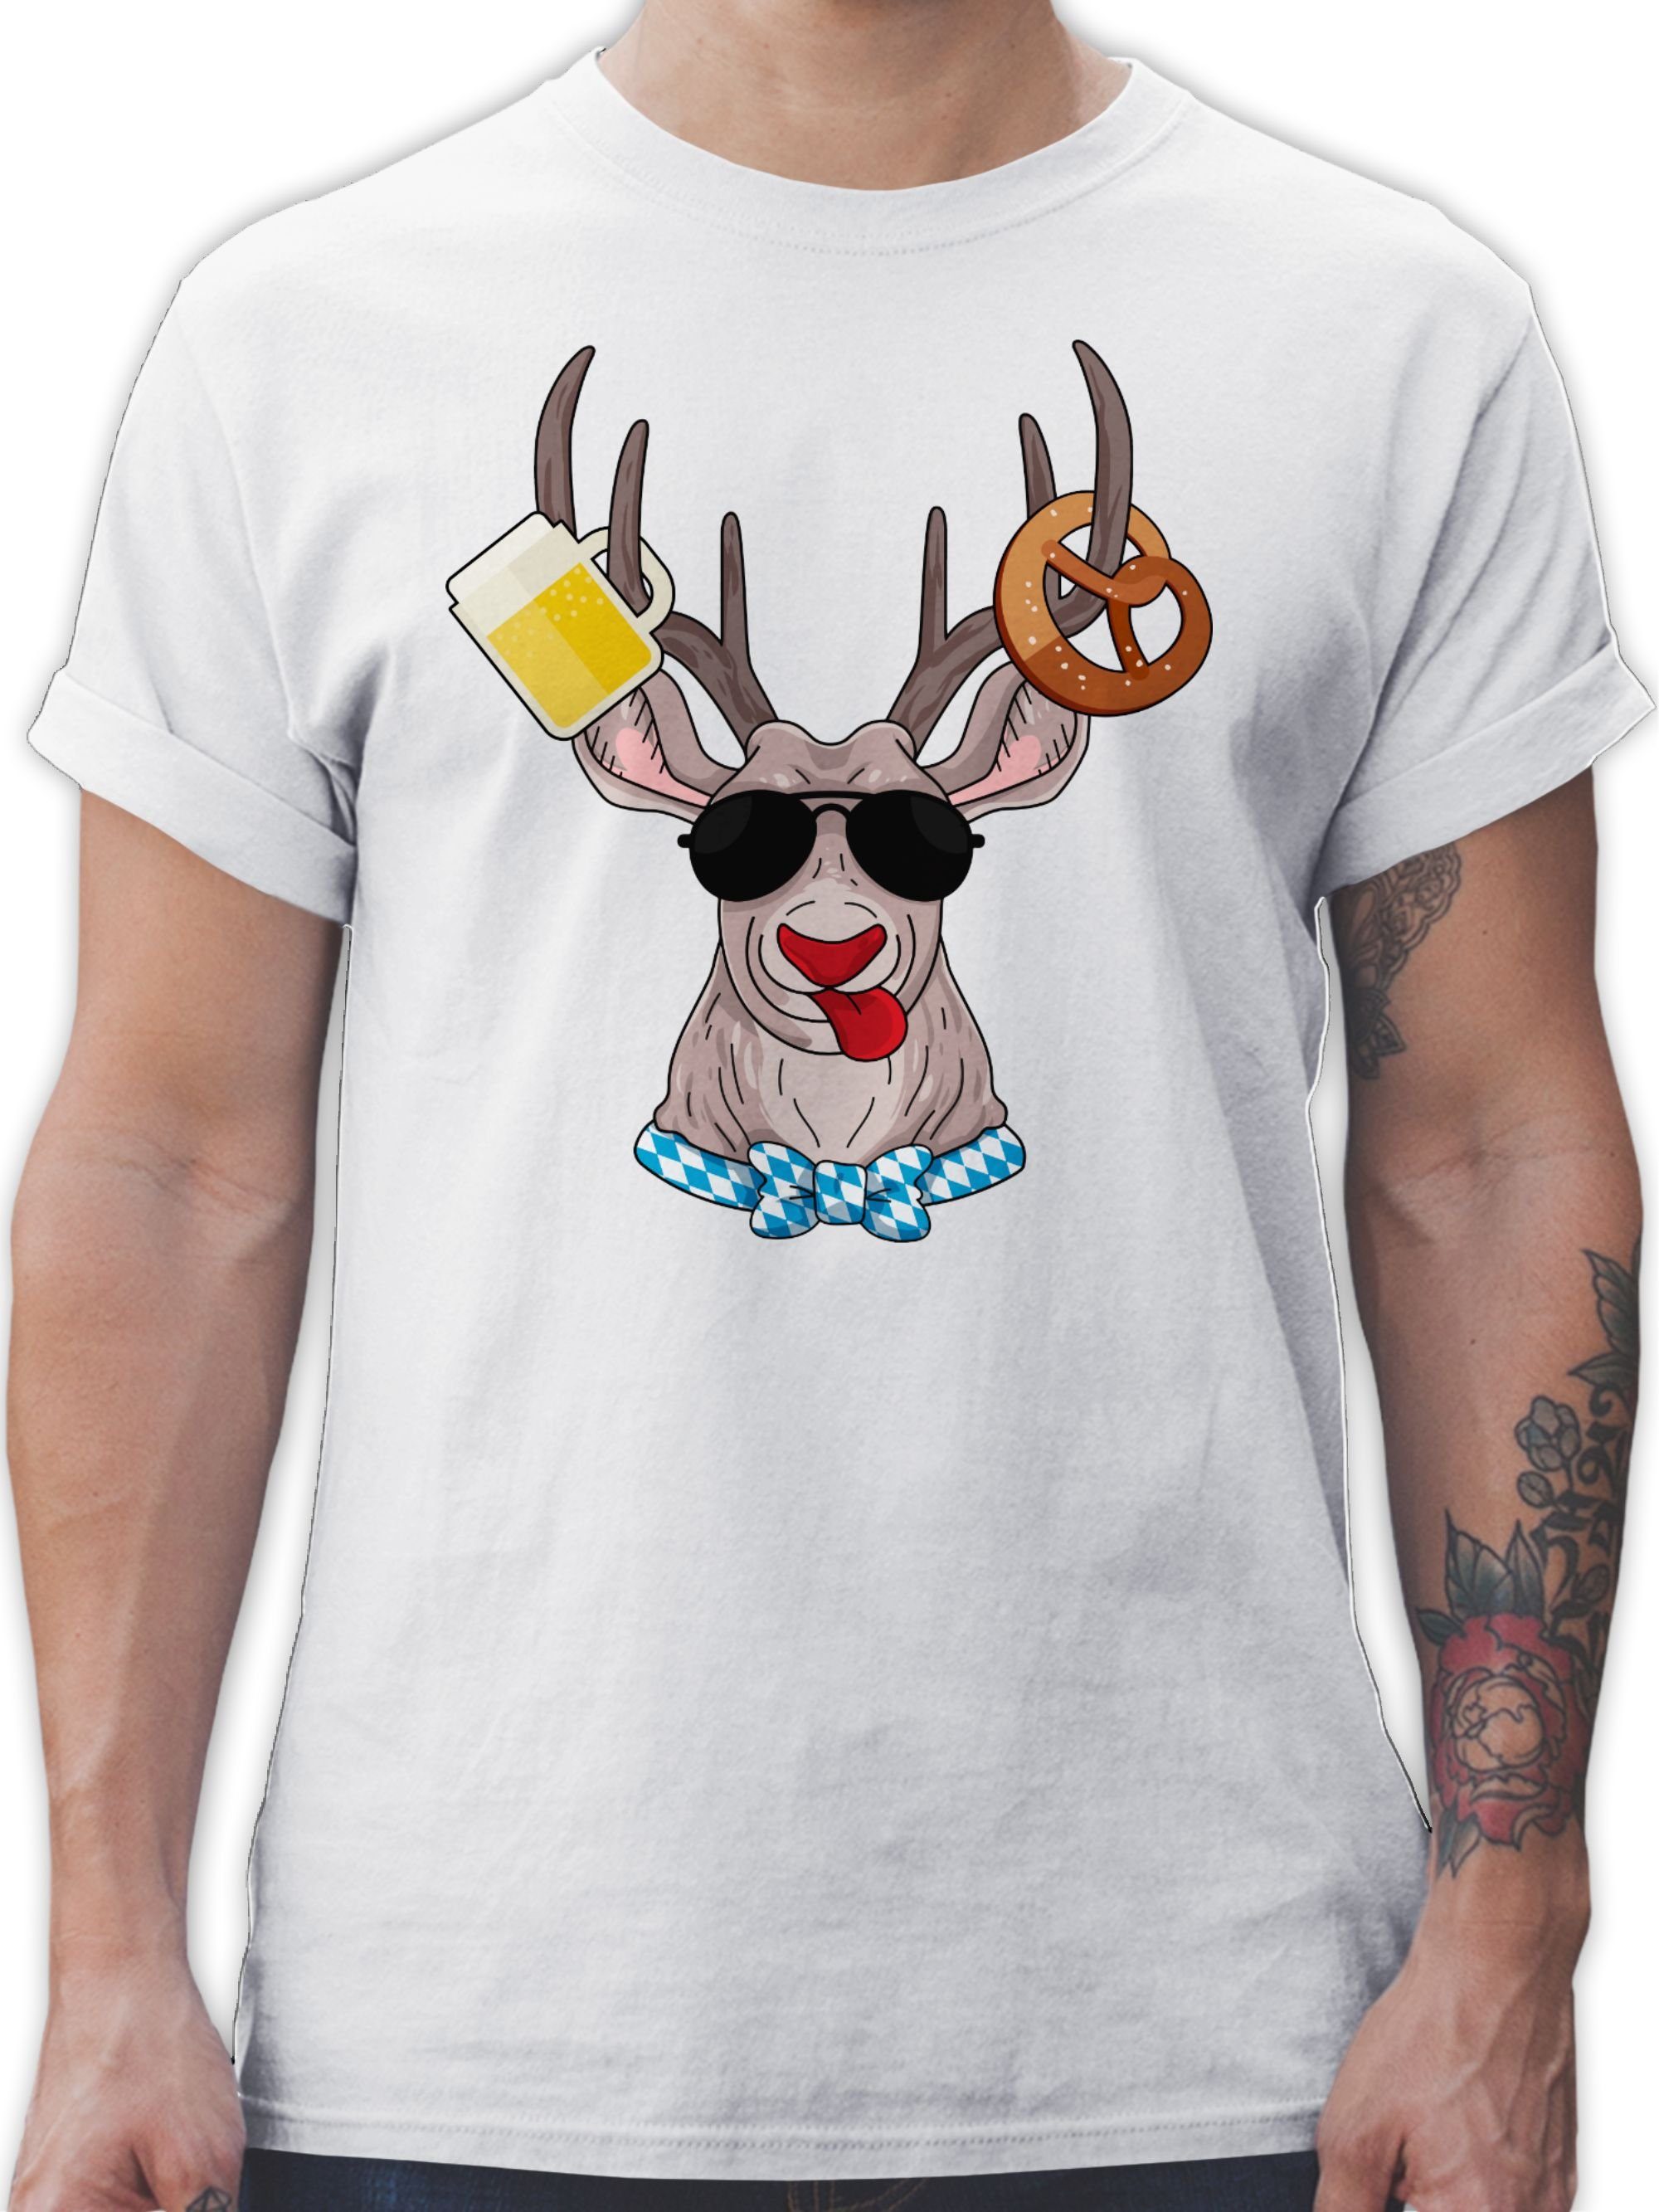 Hirsch 3 Herren Oktoberfest Oktoberfest T-Shirt Mode Shirtracer Weiß für